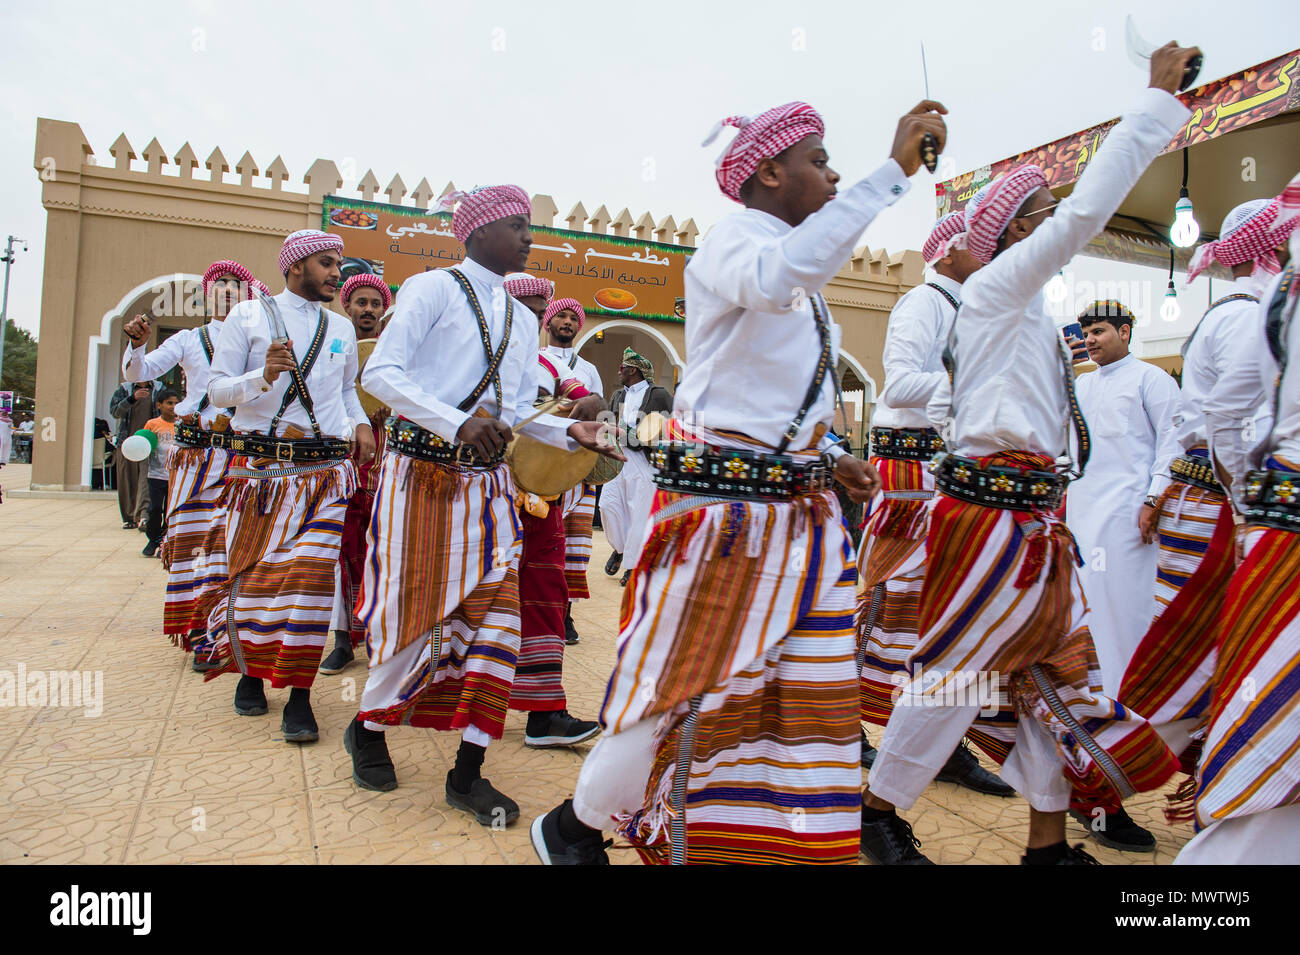 Vestito tradizionale tribesmen locale dancing al Festival Janadriyah, Riyadh, Arabia Saudita, Medio Oriente Foto Stock